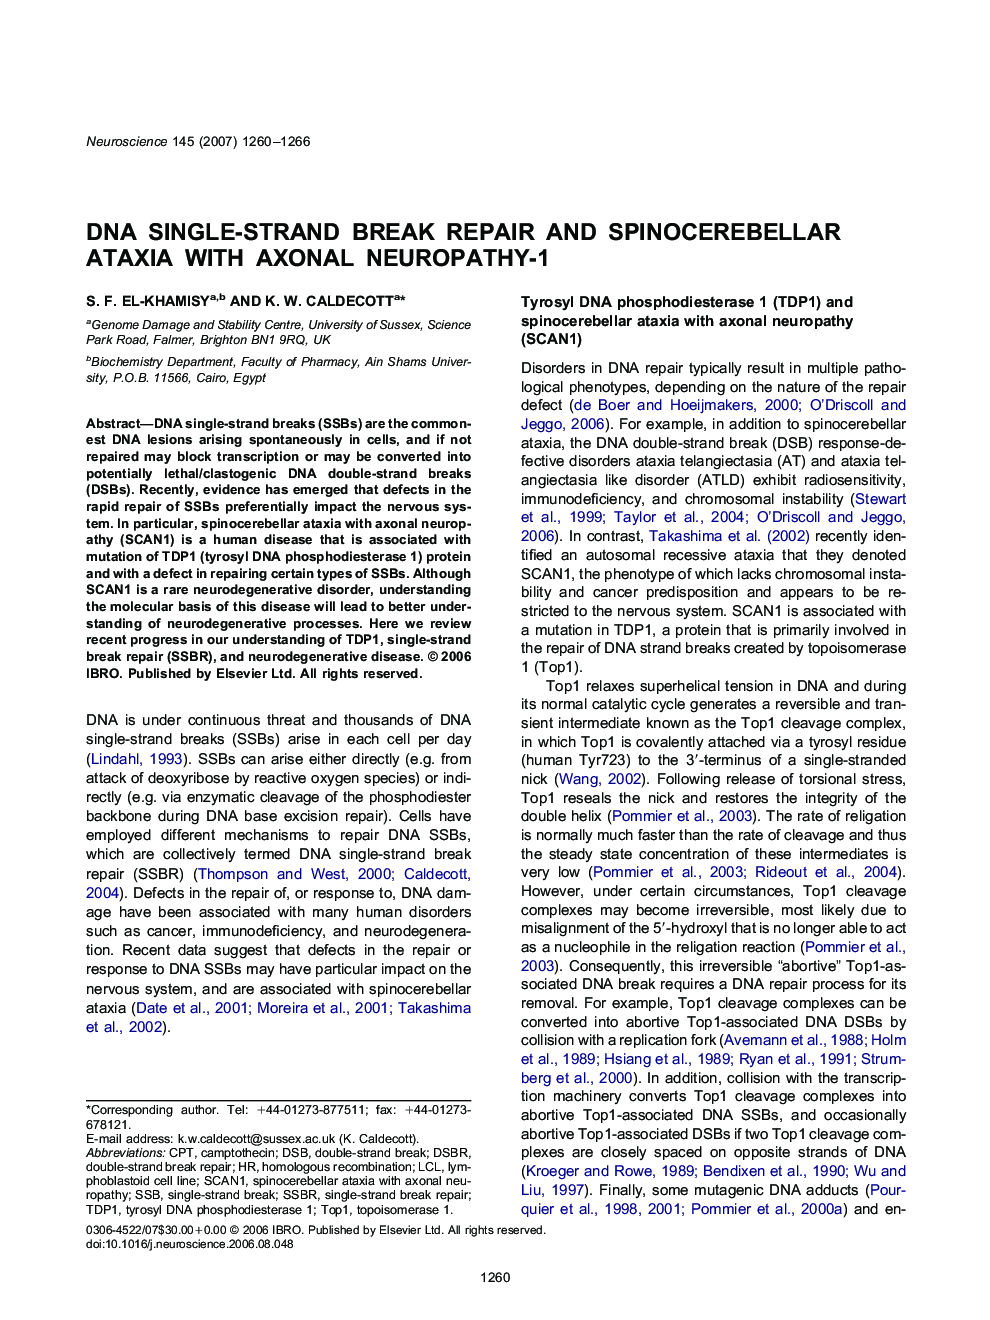 DNA single-strand break repair and spinocerebellar ataxia with axonal neuropathy-1